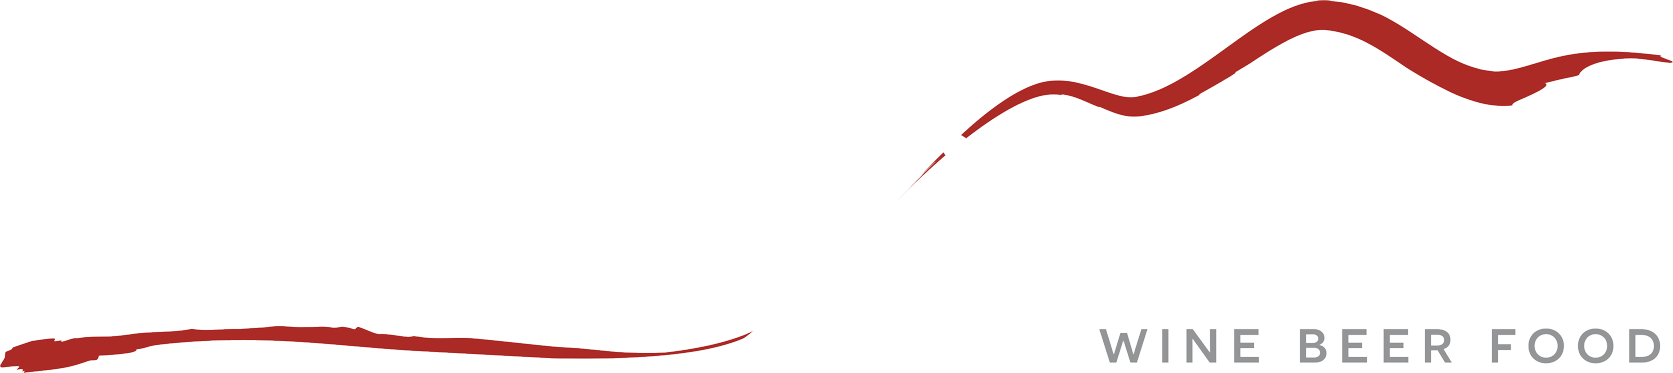 Ristorante agrituristico TerraRossa Logo